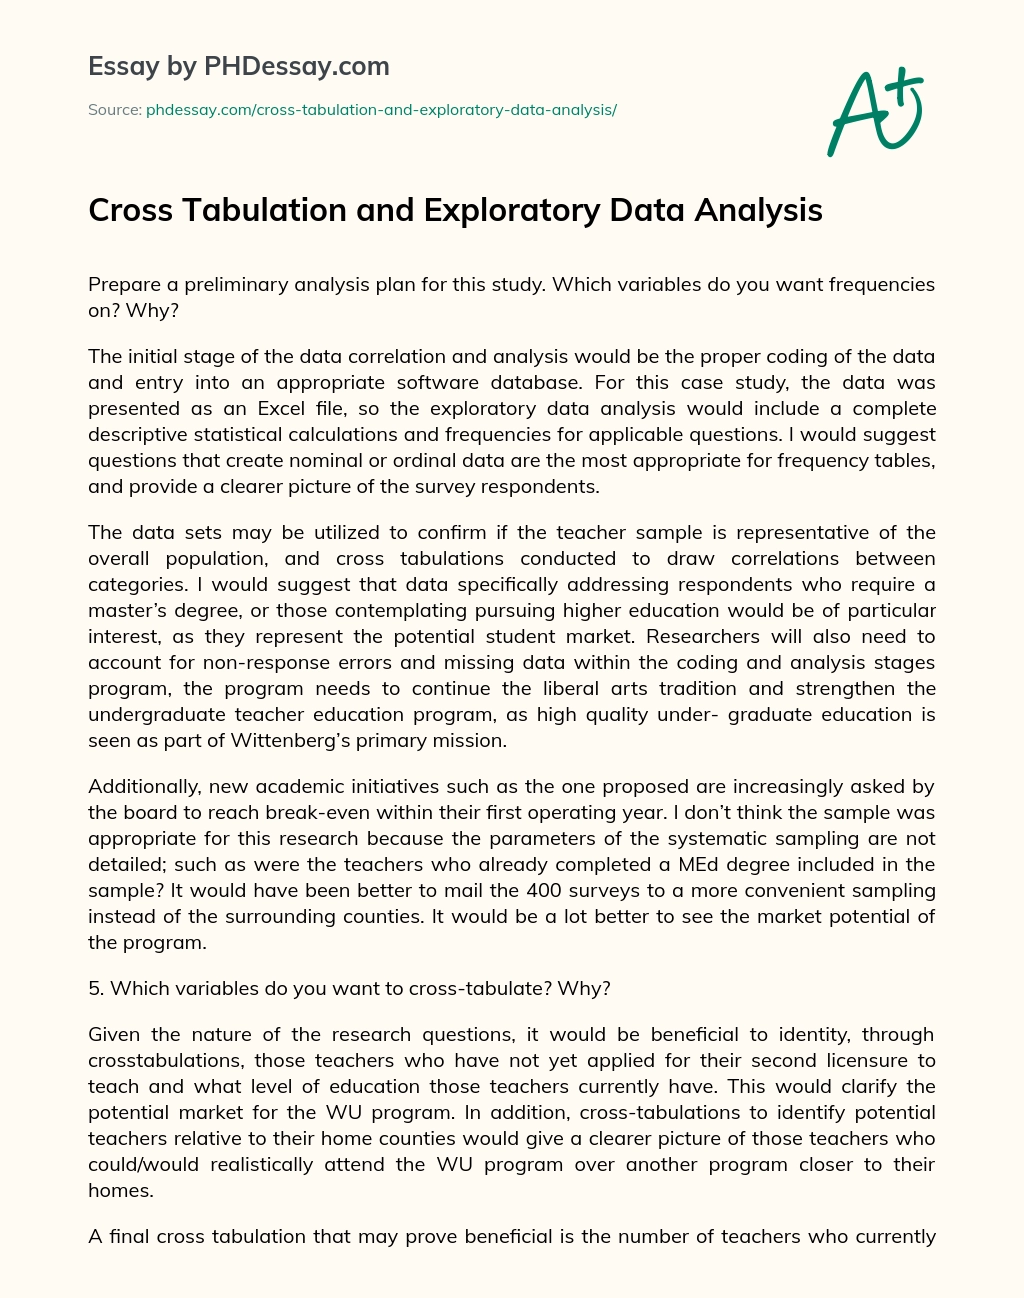 Cross Tabulation and Exploratory Data Analysis